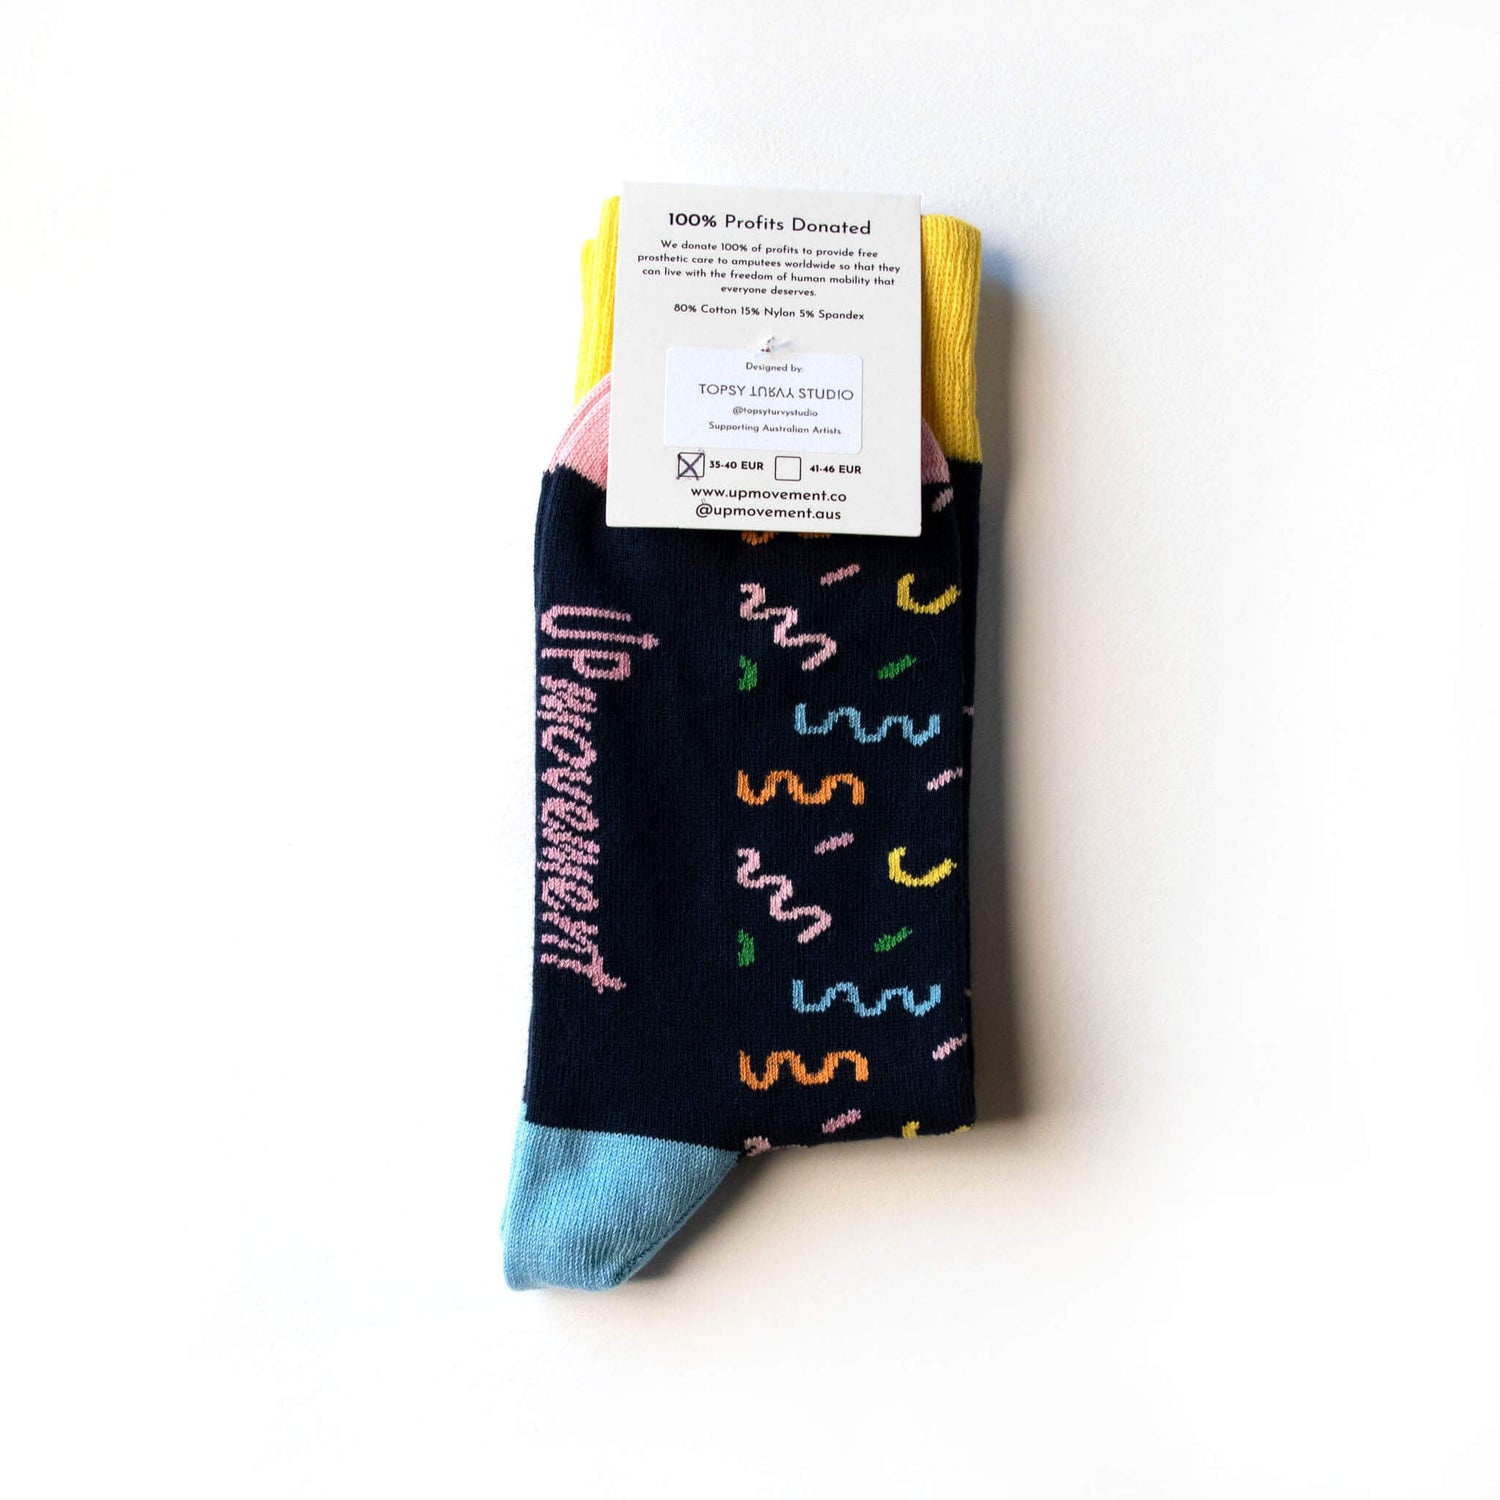 Socks For Good Australia Funfetti Design